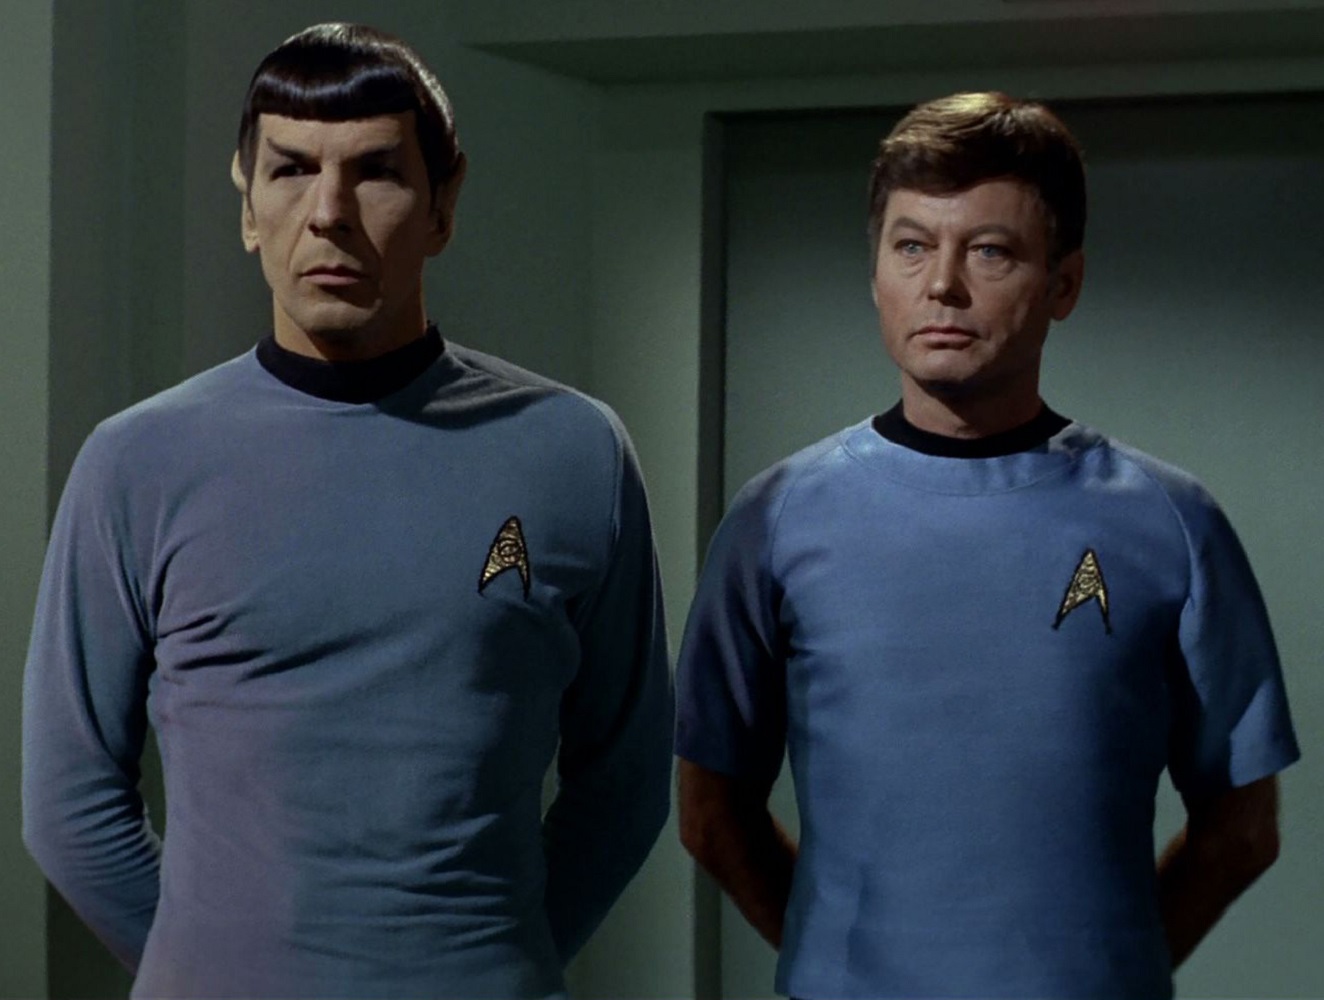 TOS medical uniform - Star Trek Costume Guide